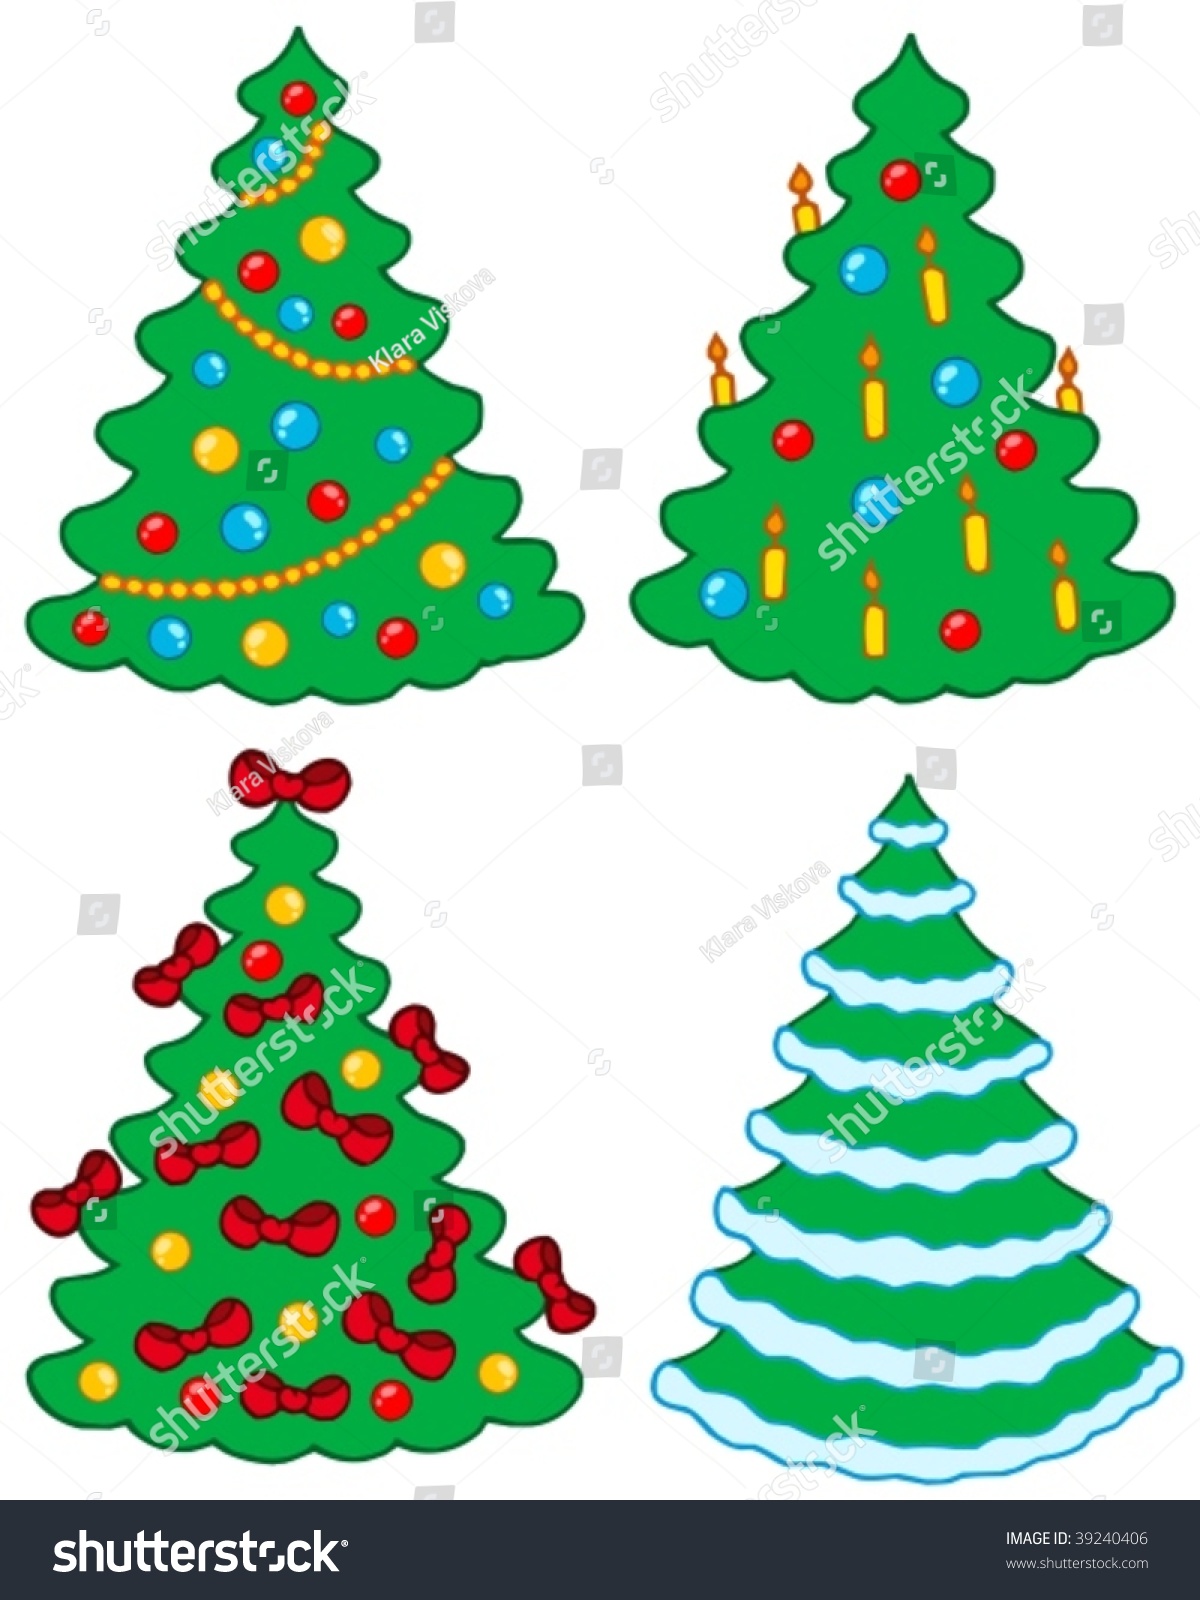 Various Christmas Trees - Vector Illustration. - 39240406 : Shutterstock